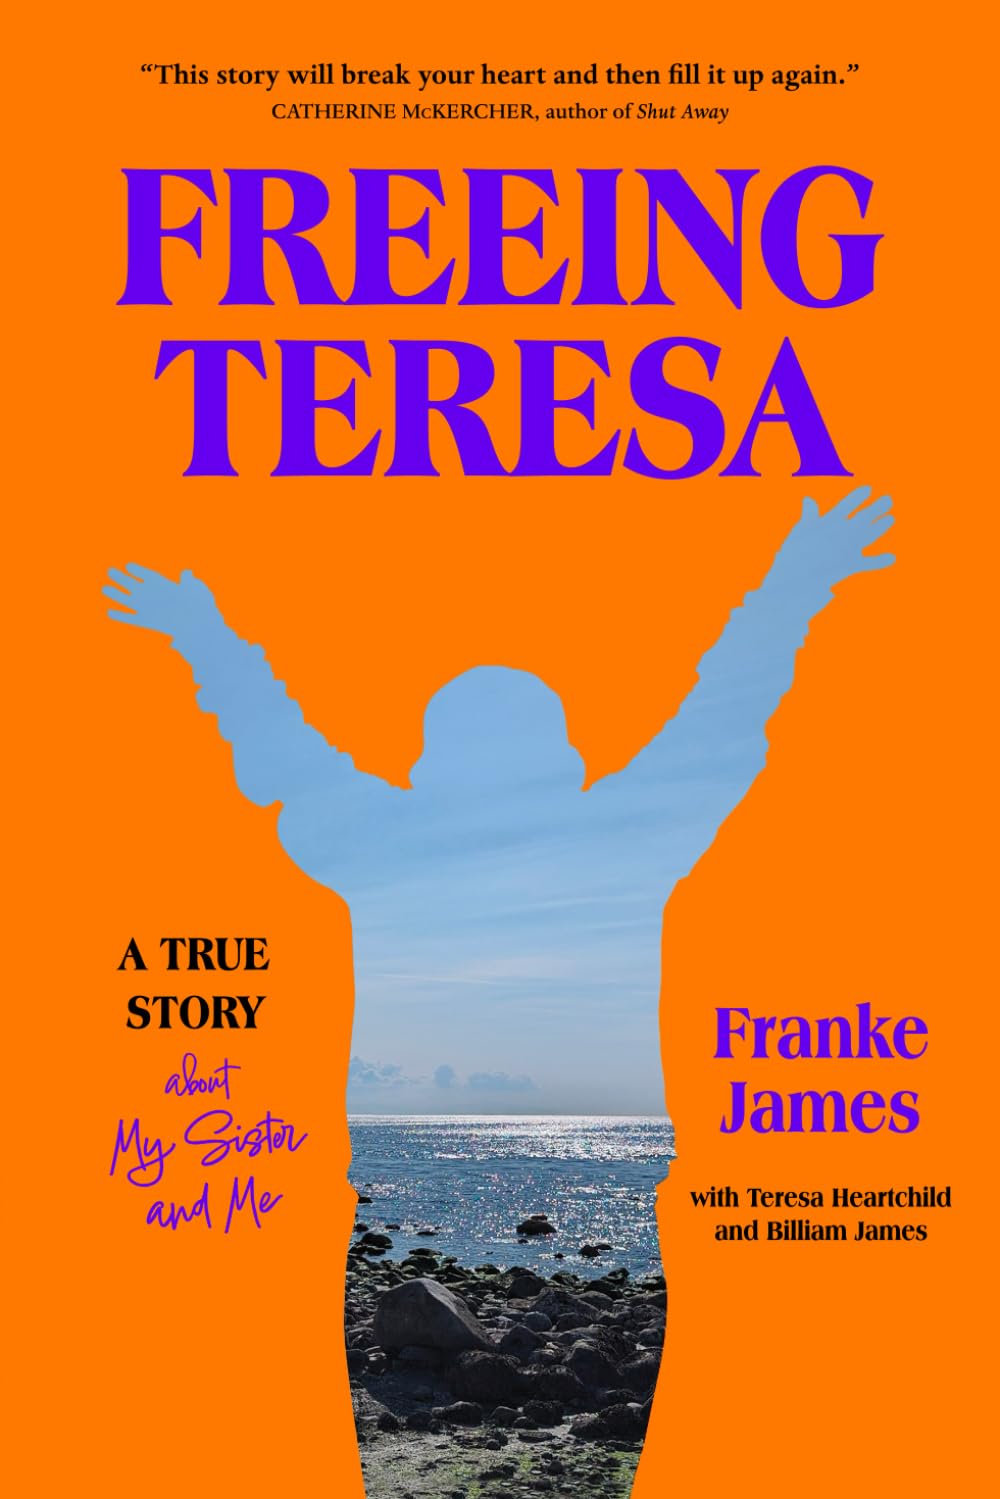 Freeing Teresa by Franke James